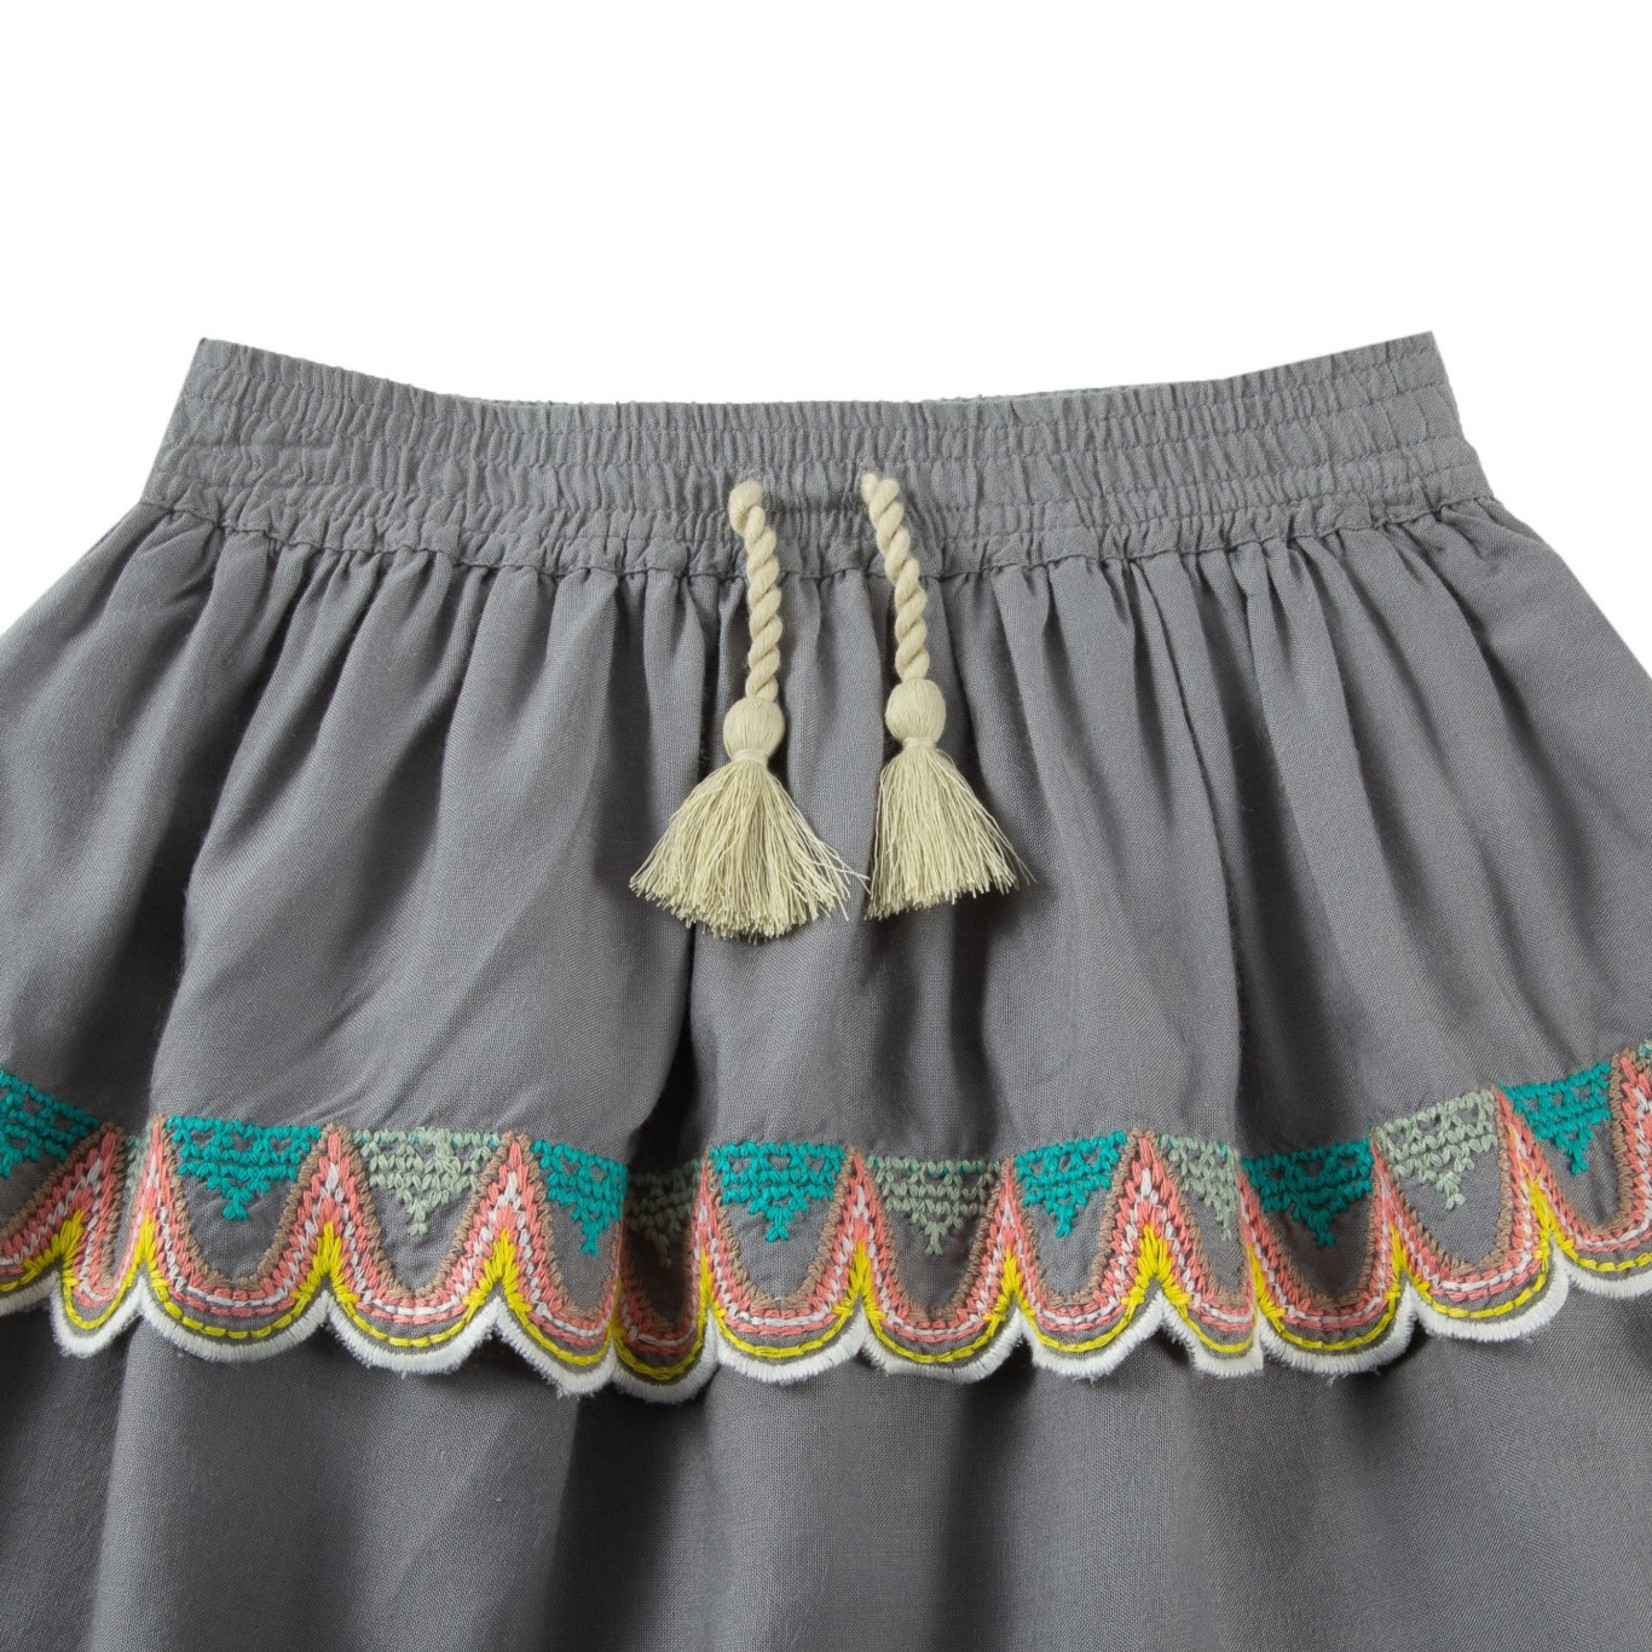 Peek Aren't You Curious Embroidered Ruffle Skirt